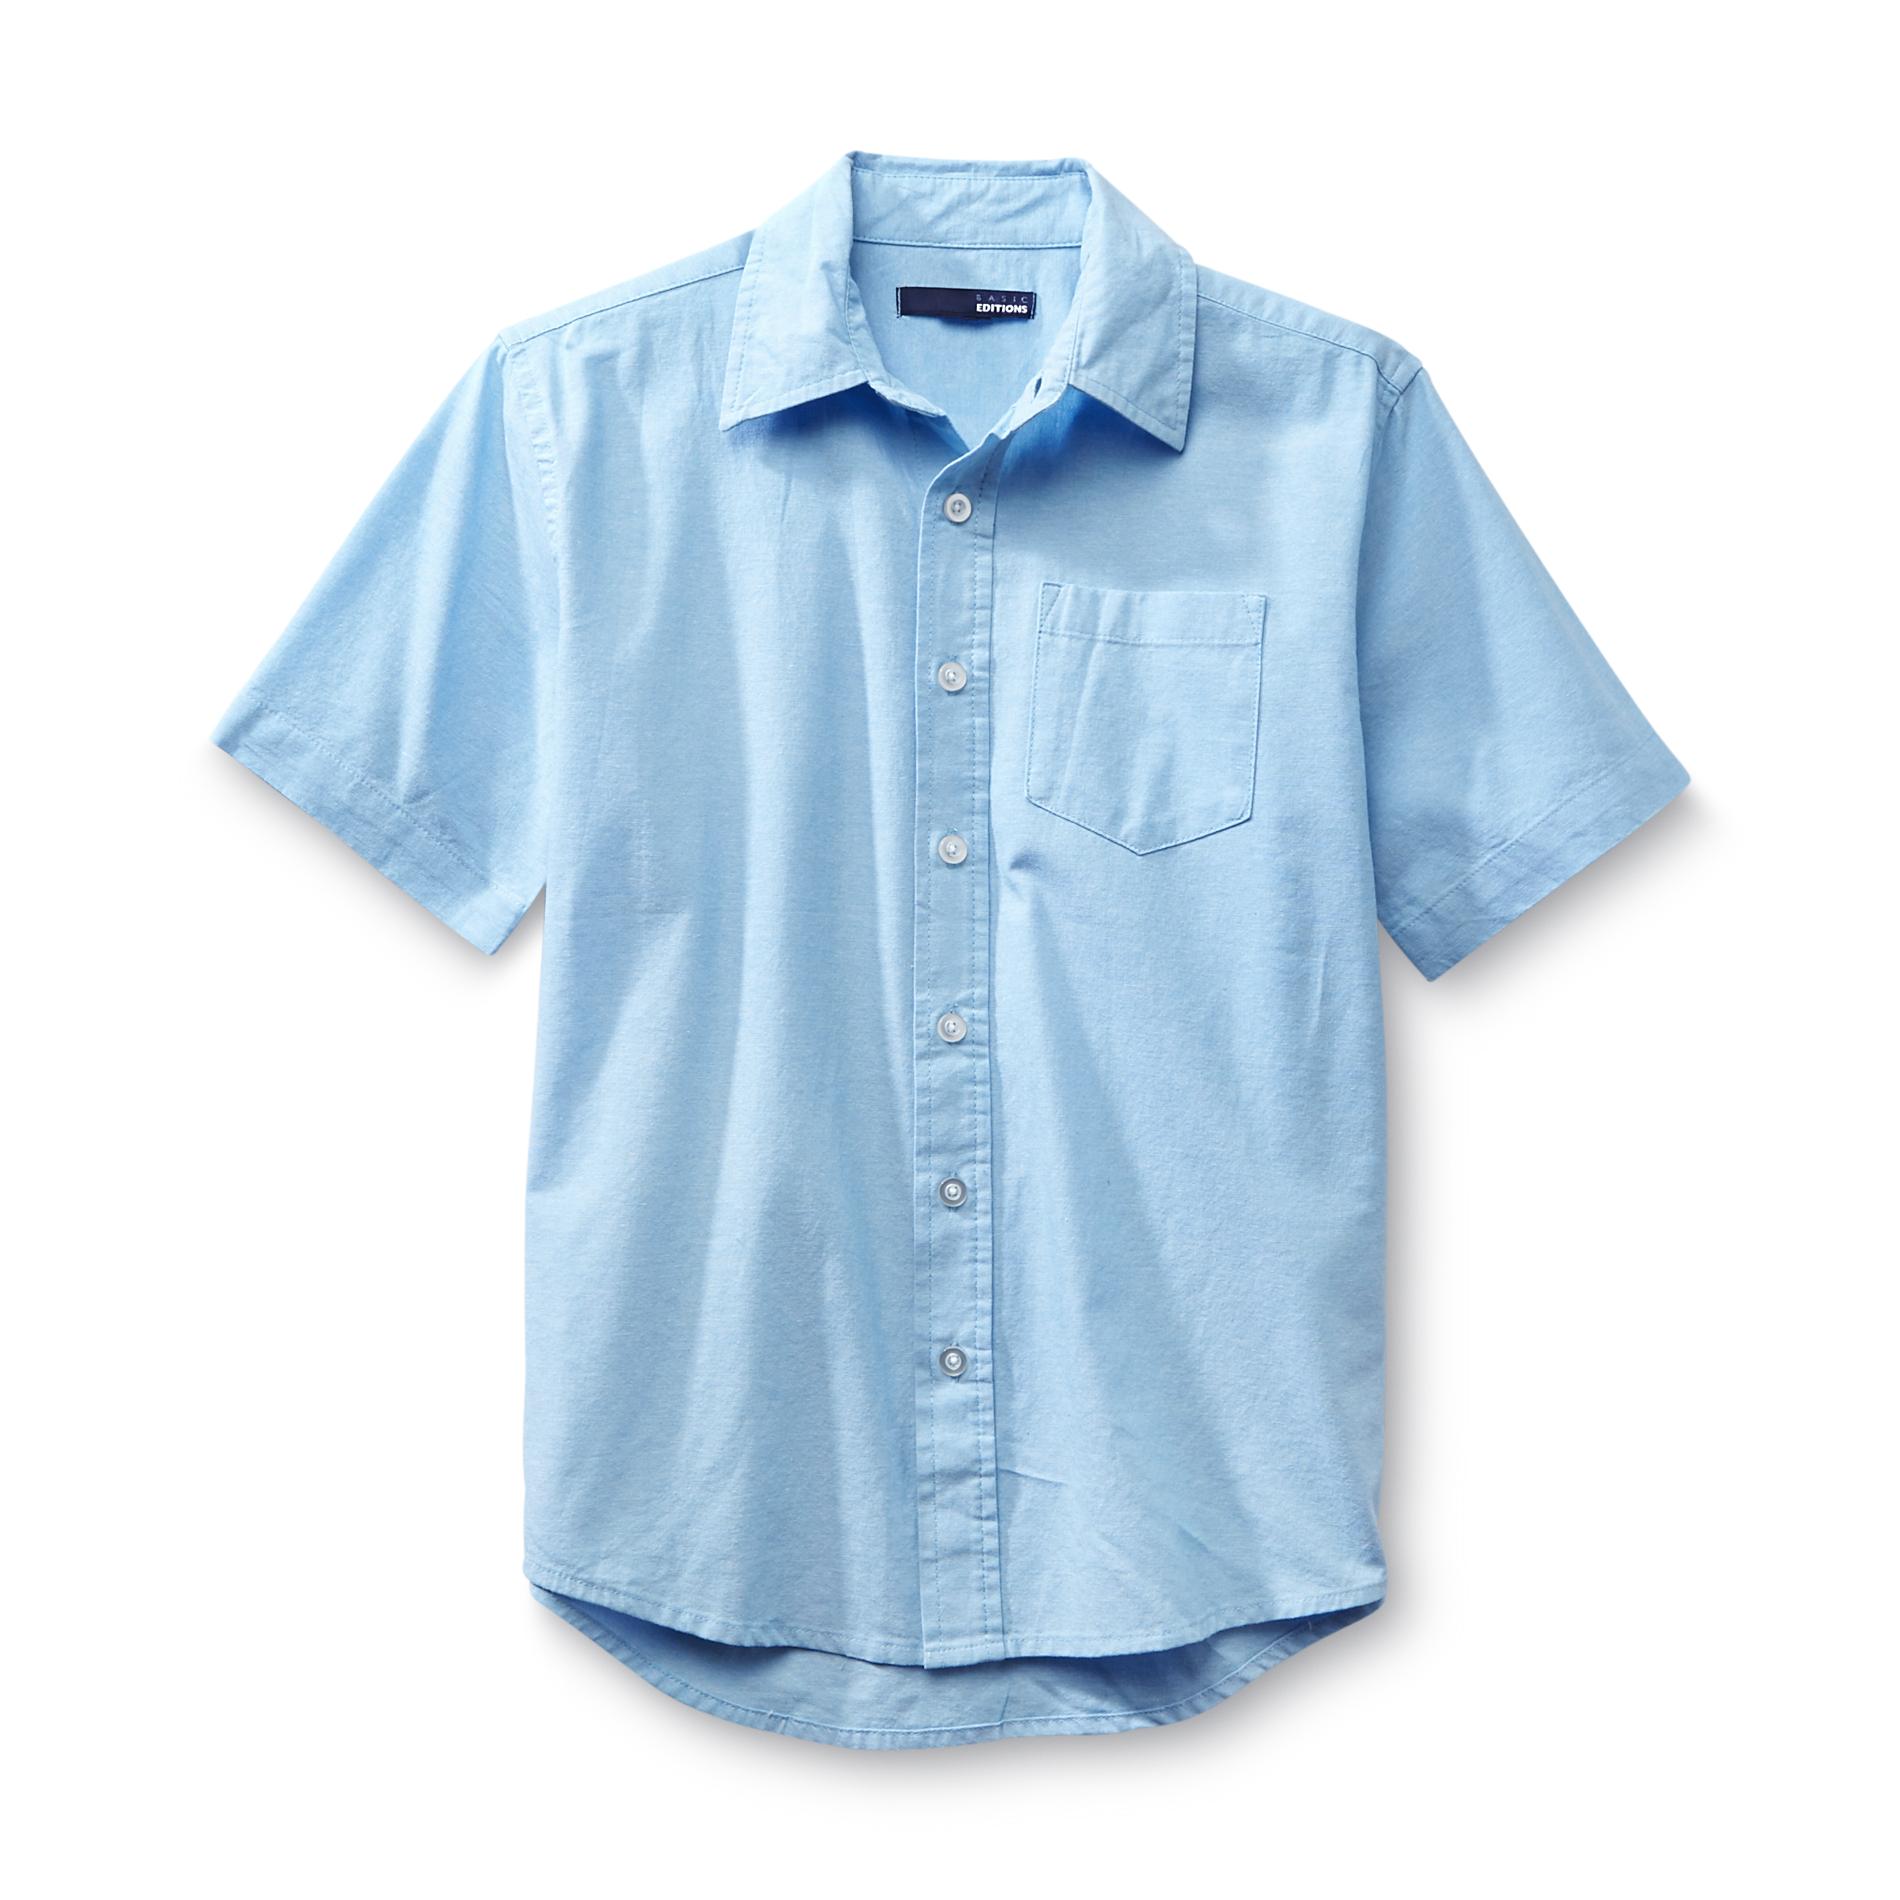 Basic Editions Boy's Short-Sleeve Oxford Dress Shirt